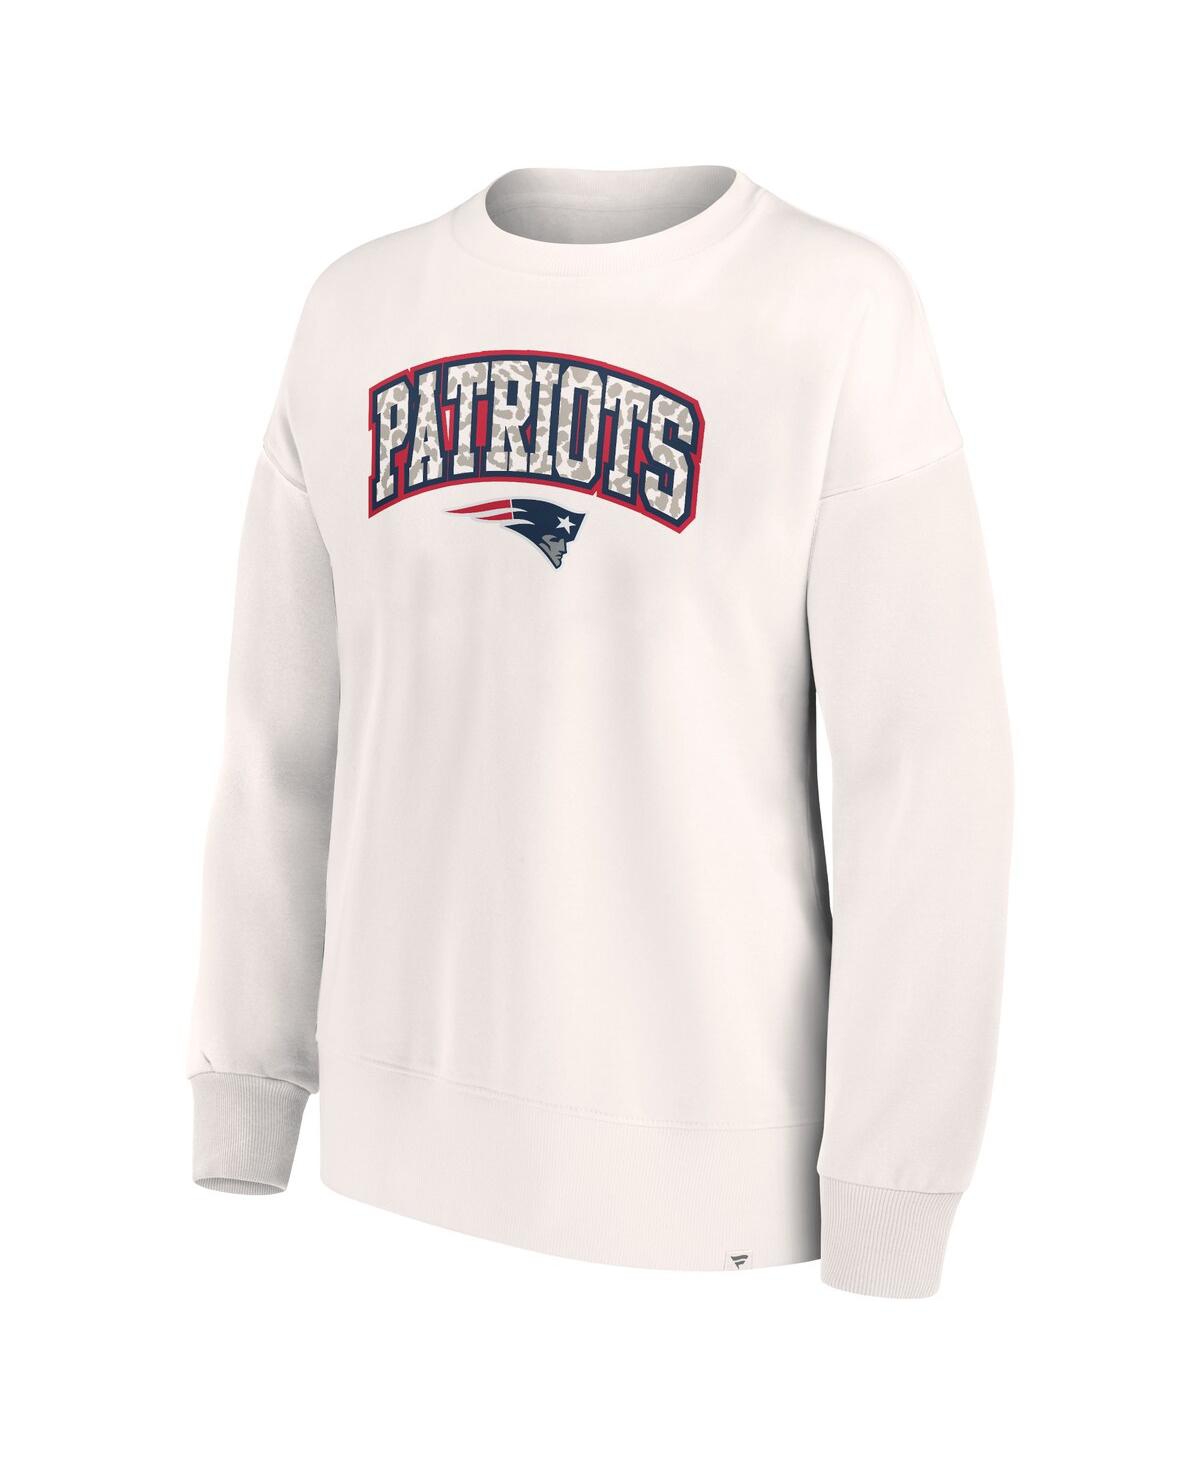 Shop Fanatics Women's  White New England Patriots Leopard Team Pullover Sweatshirt